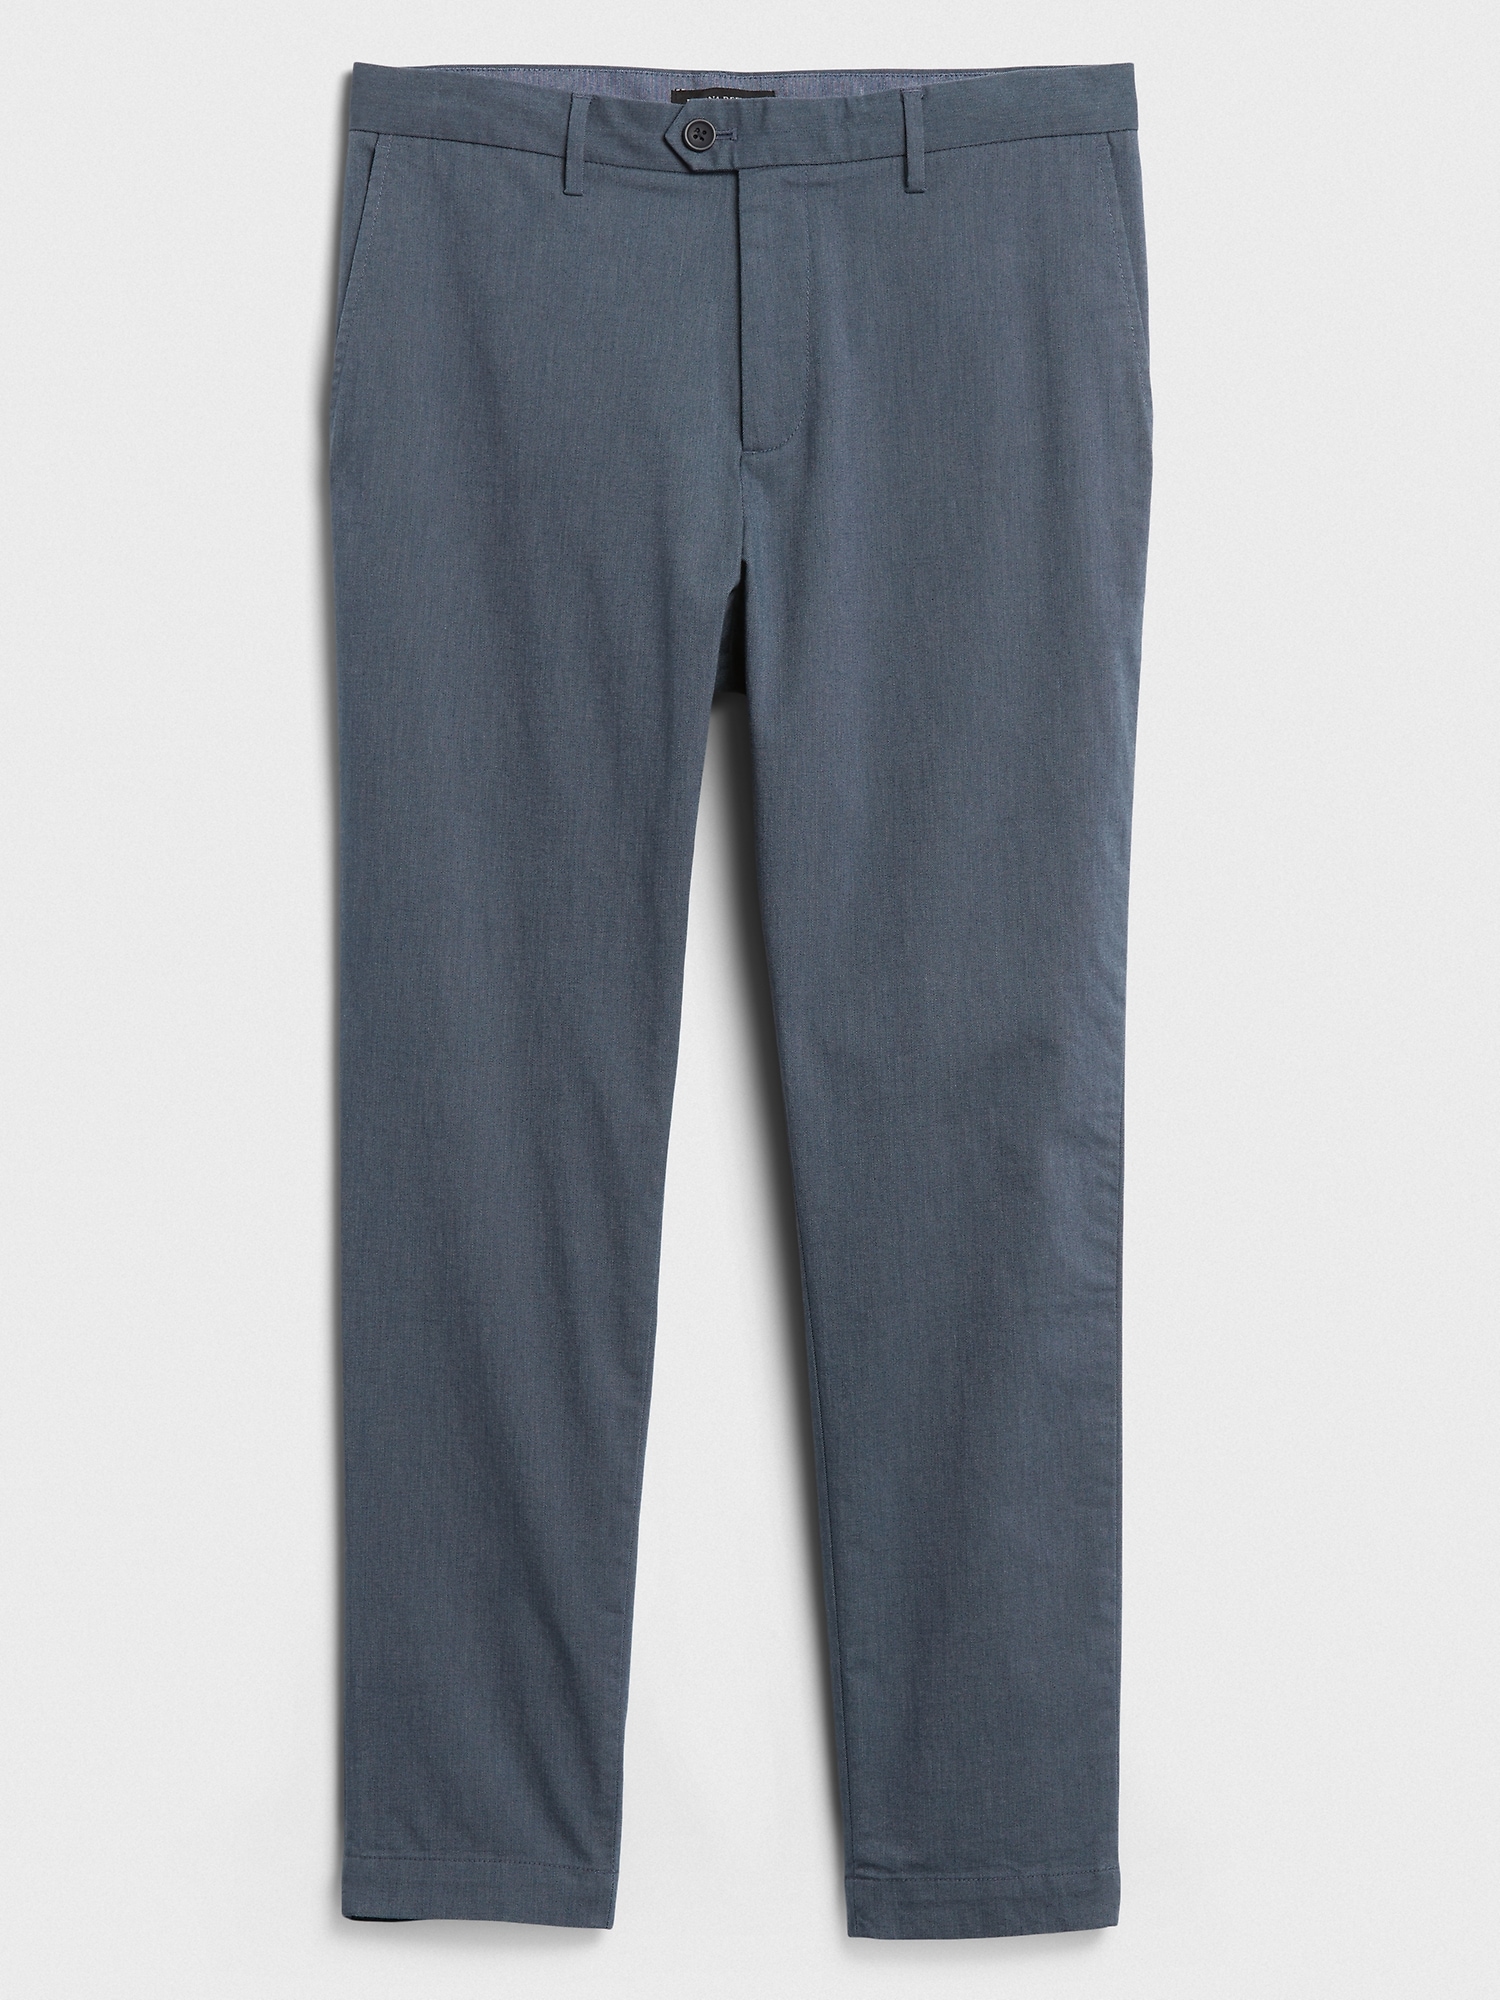 Ankle-Length Grayson Blue Texture Pant | Banana Republic Factory